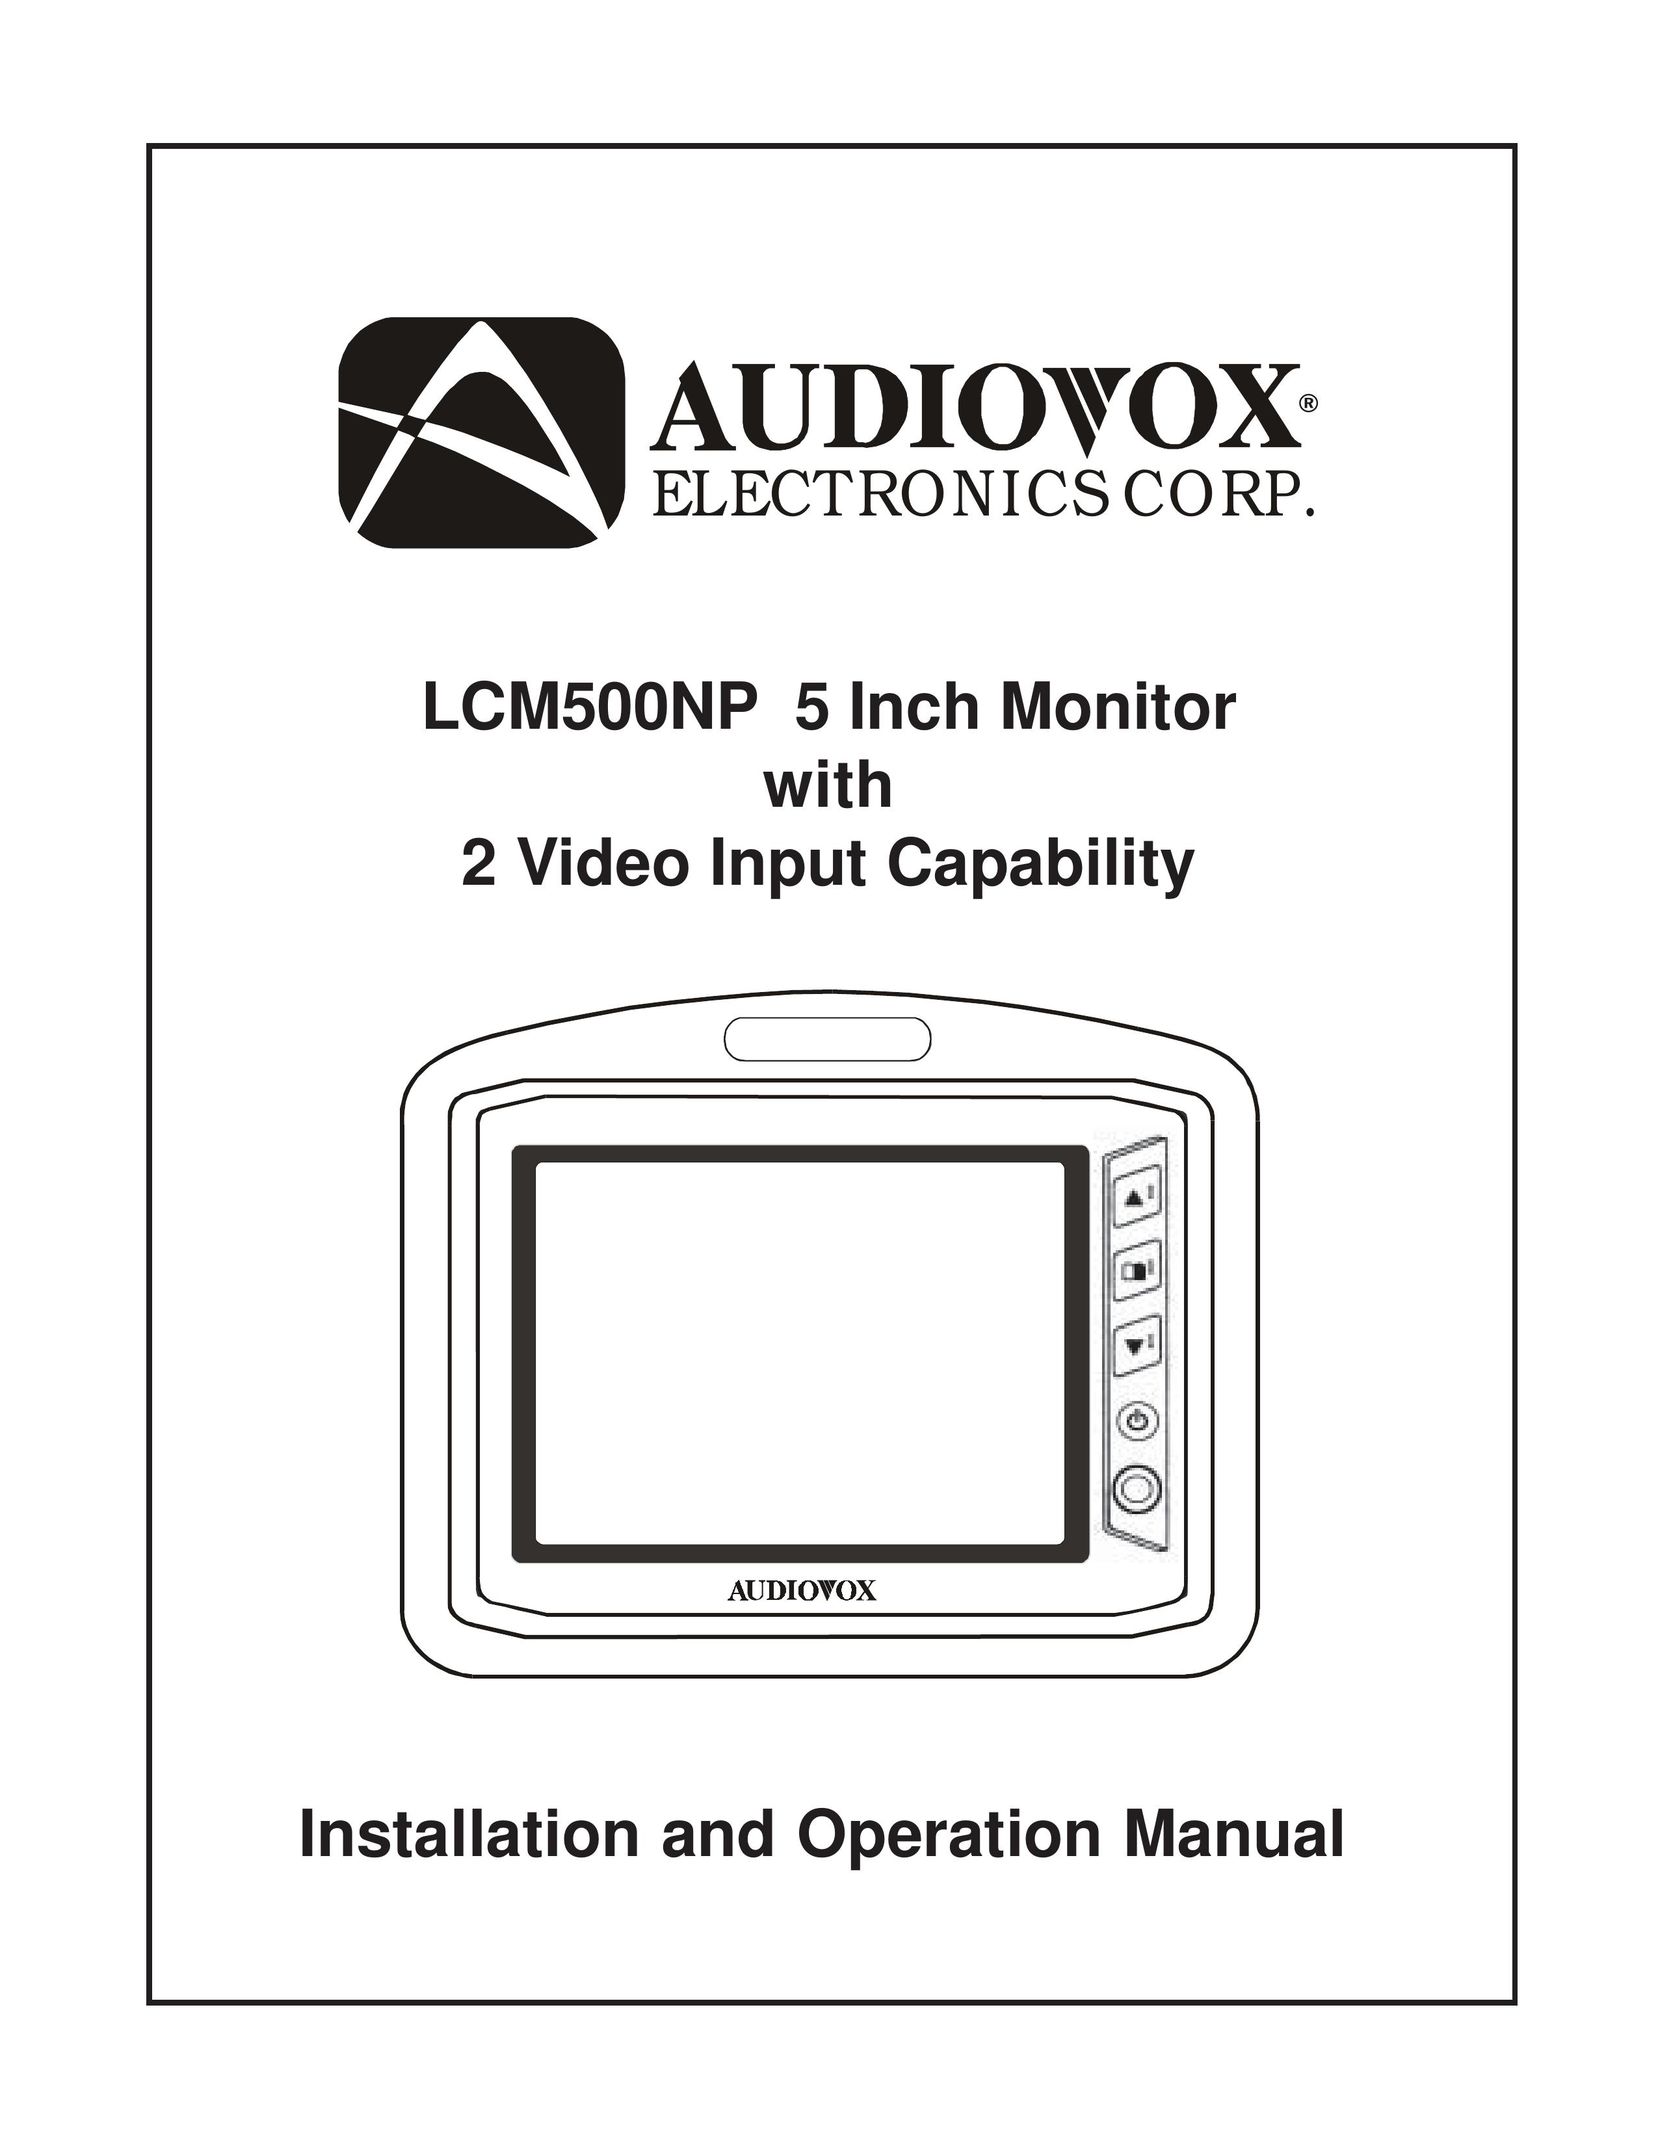 Audiovox LCM500NP Computer Monitor User Manual